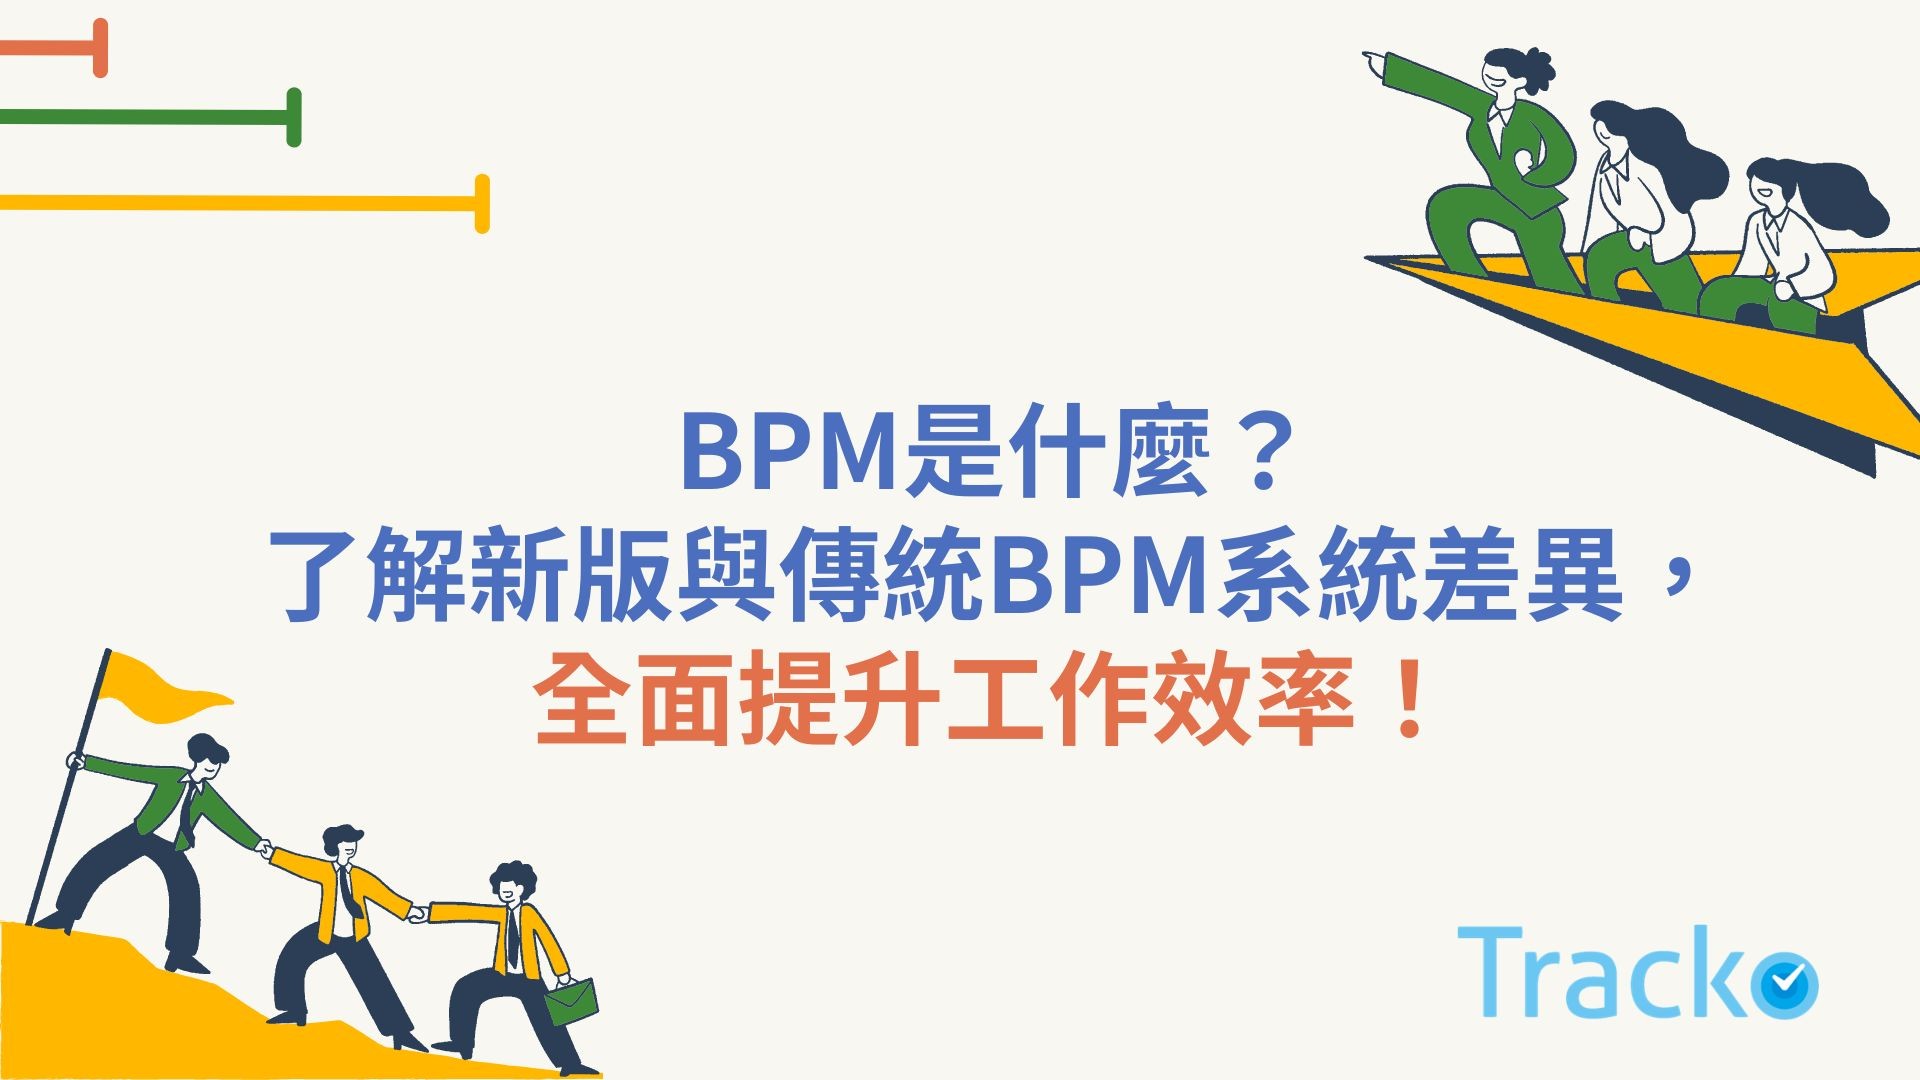 BPM是什麼？本文將帶您了解傳統BPM系統的限制，並說明新版企業流程優化系統的優勢，以及如何應對傳統BPM系統存在的問題，幫助企業加速數位轉型！